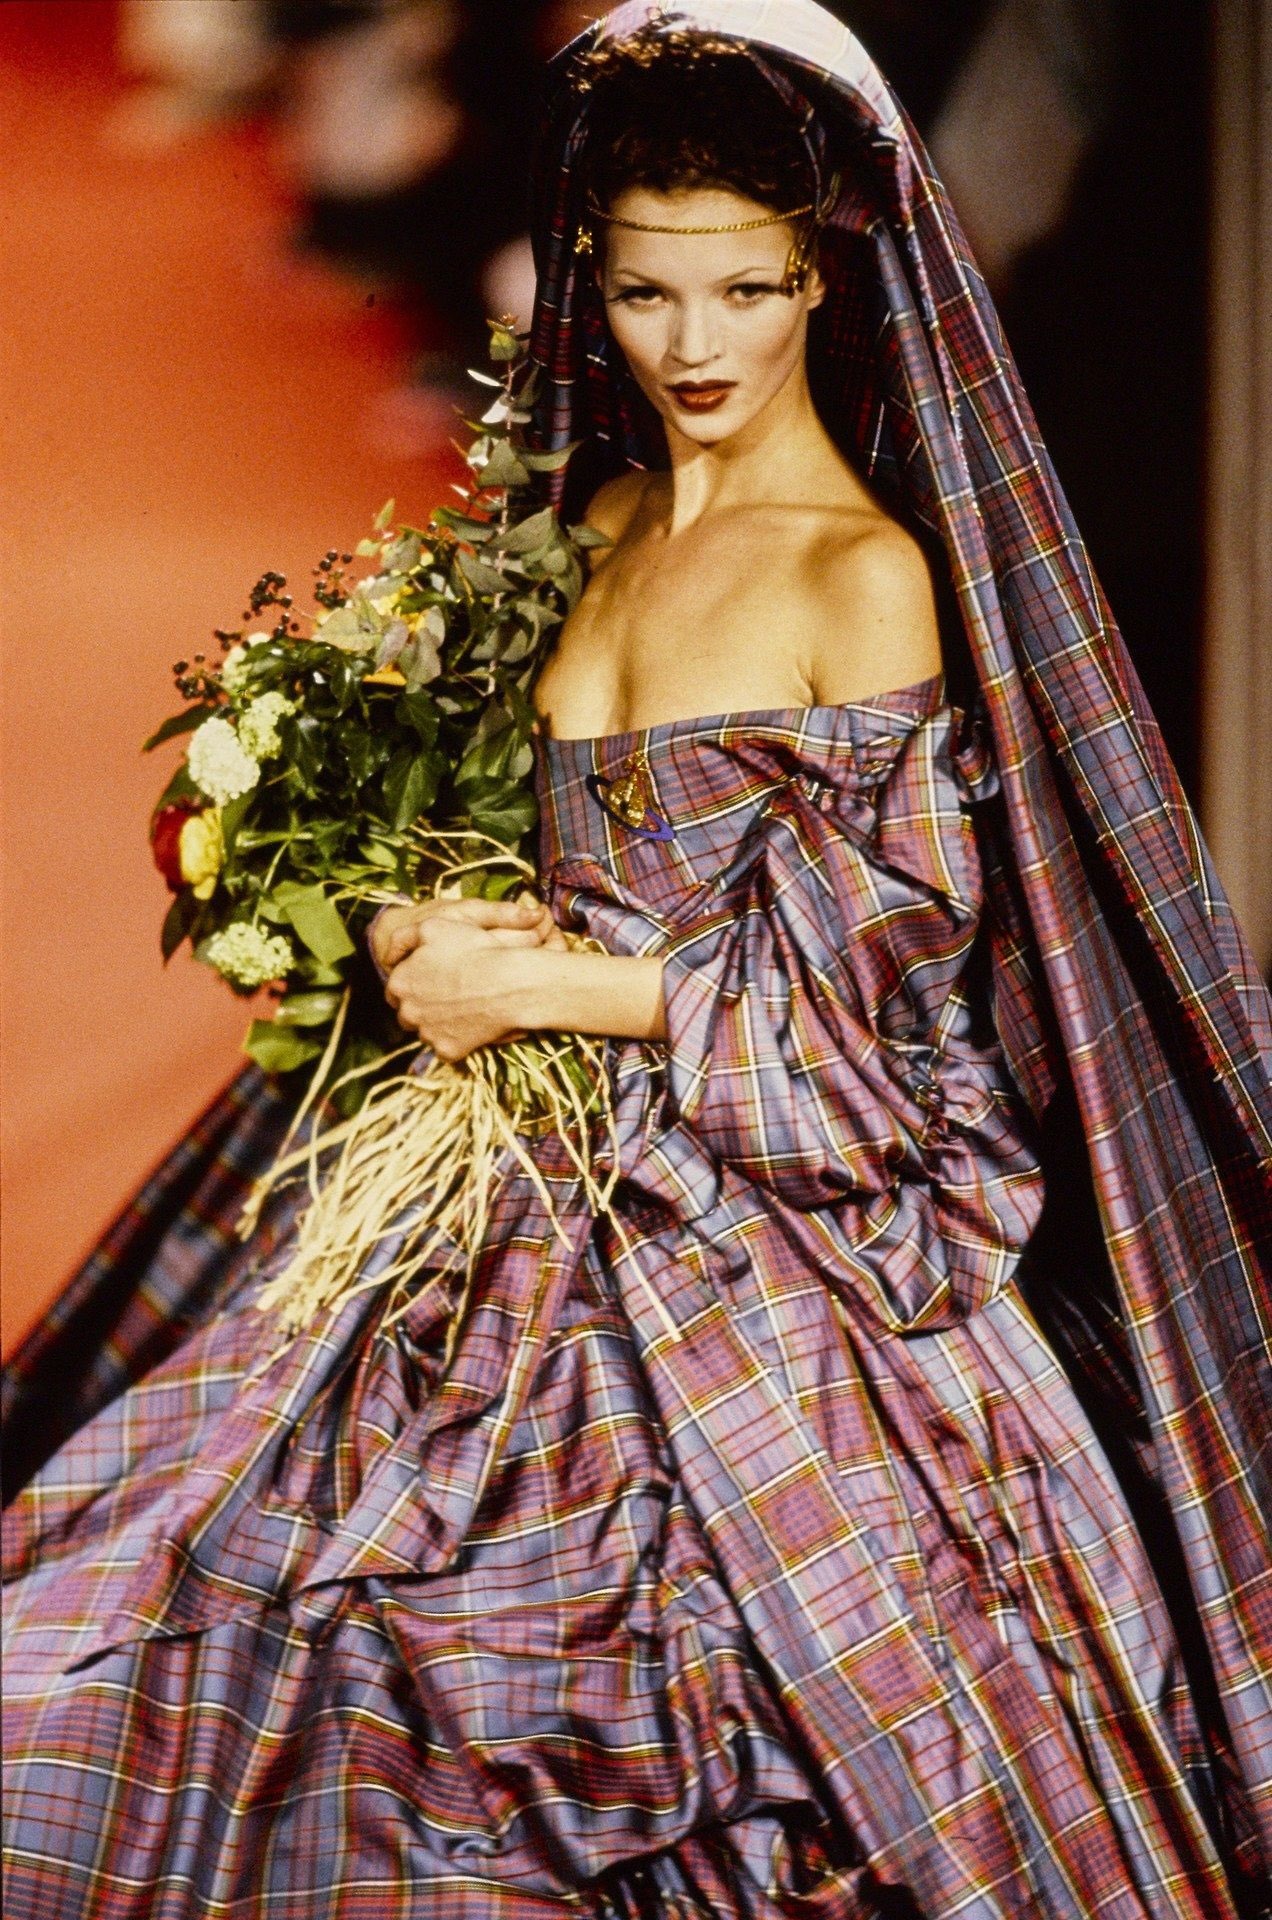 1993-94 - Vivienne Westwood show